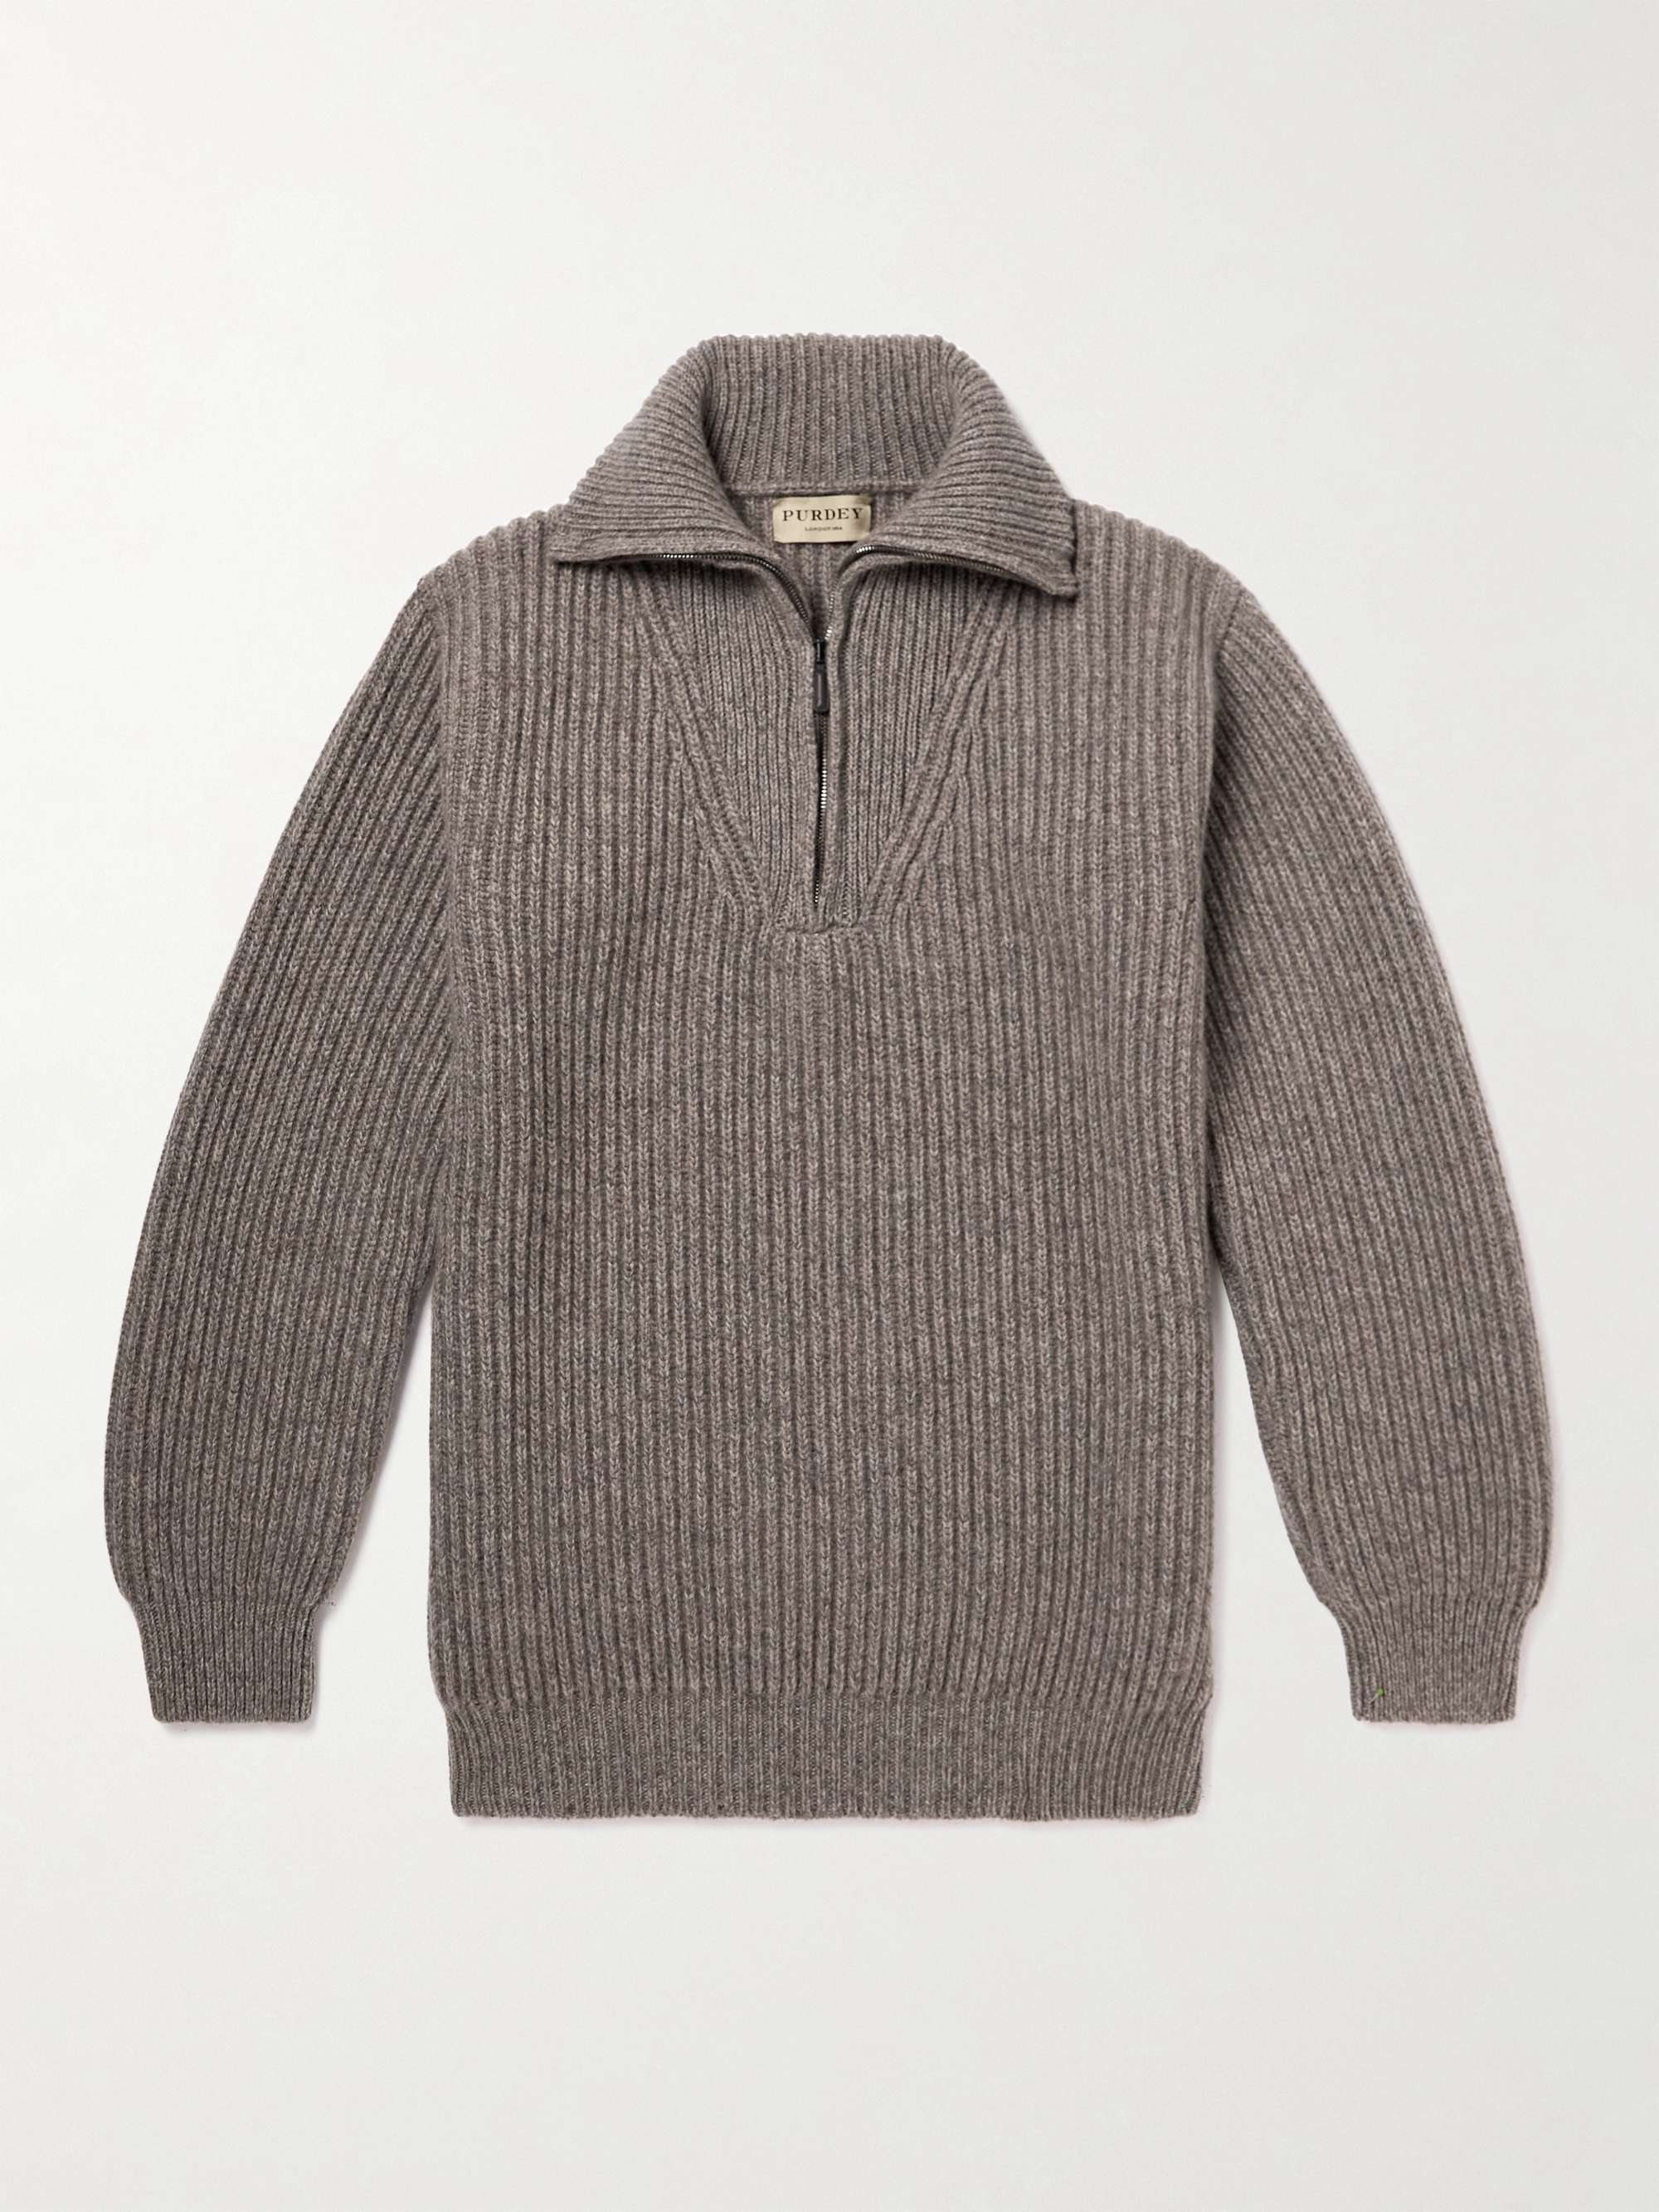 PURDEY Ribbed Cashmere Half-Zip Sweater for Men | MR PORTER